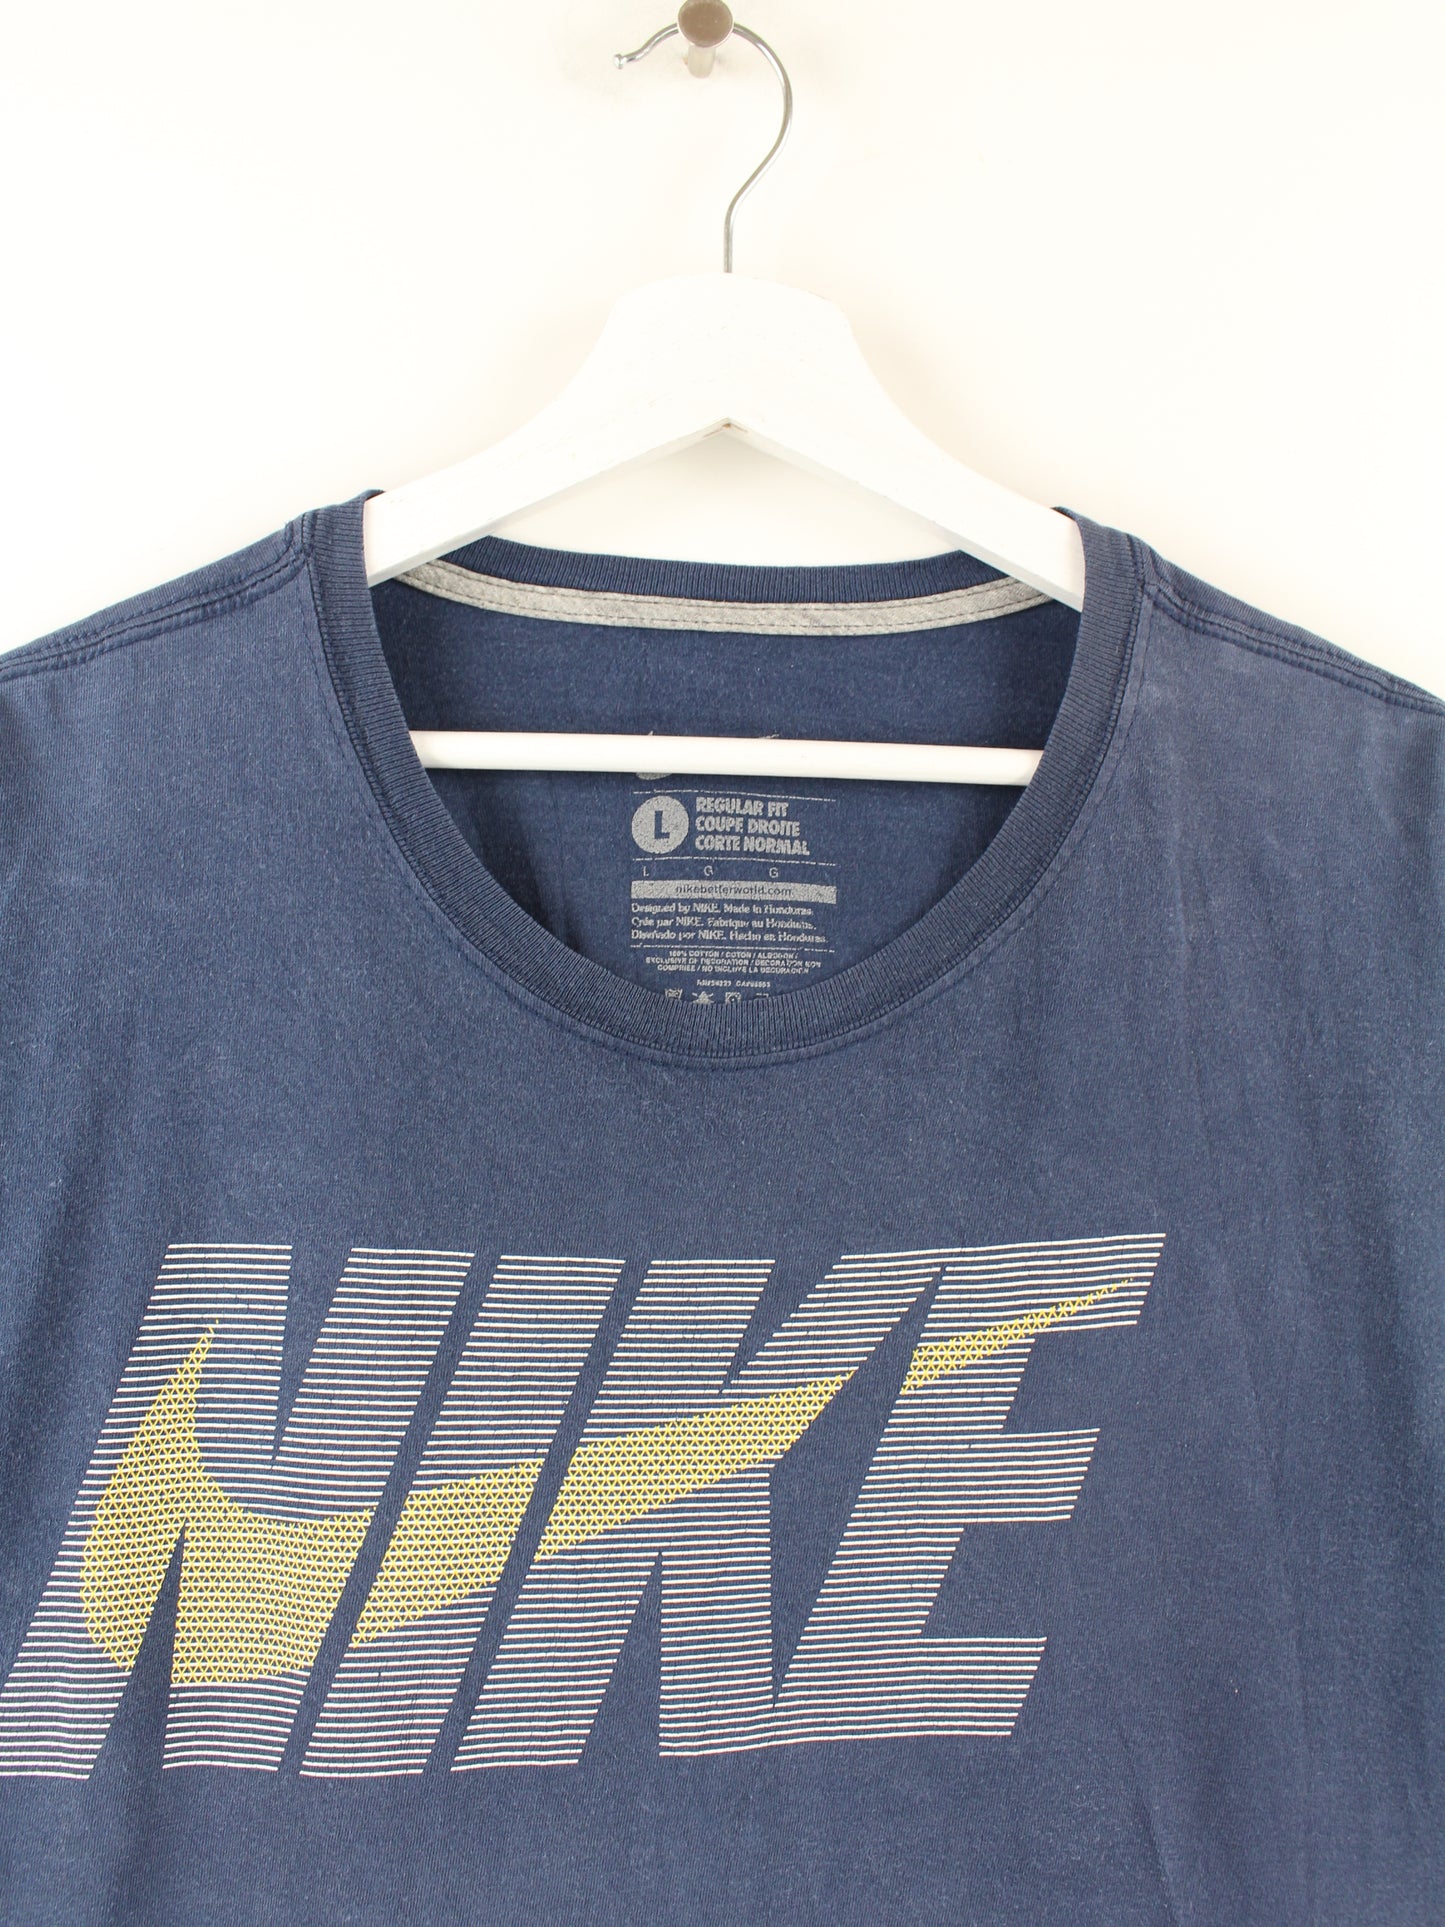 Nike Print T-Shirt Blue L